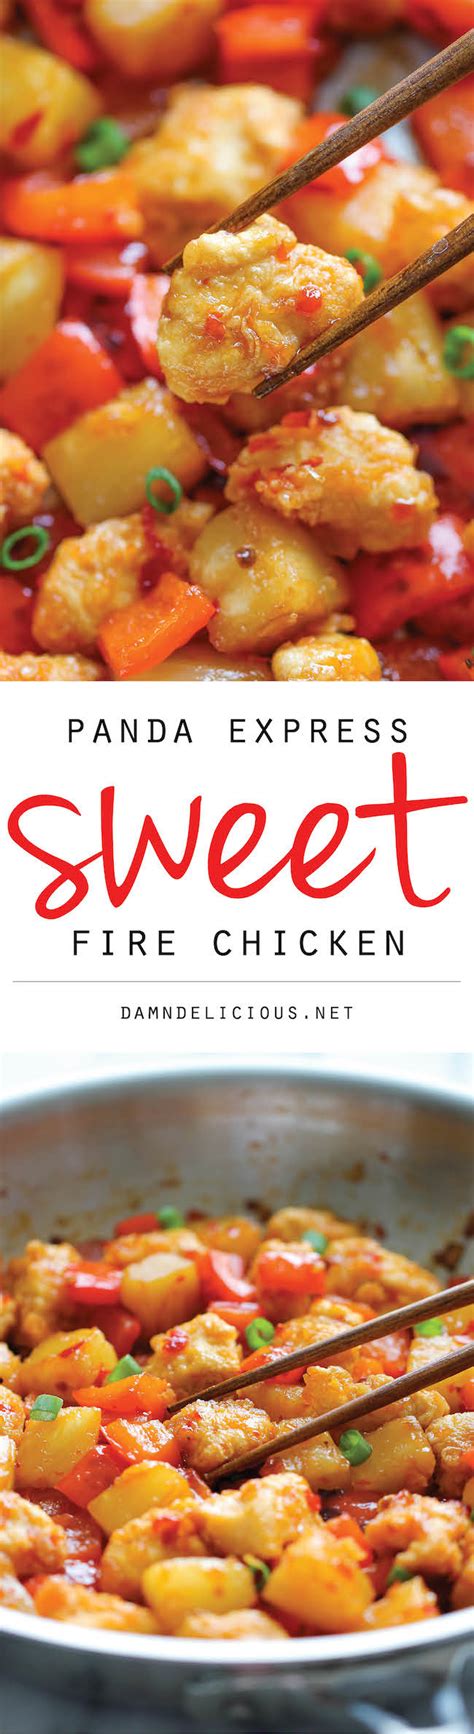 Panda Express Sweet Fire Chicken Copycat Damn Delicious